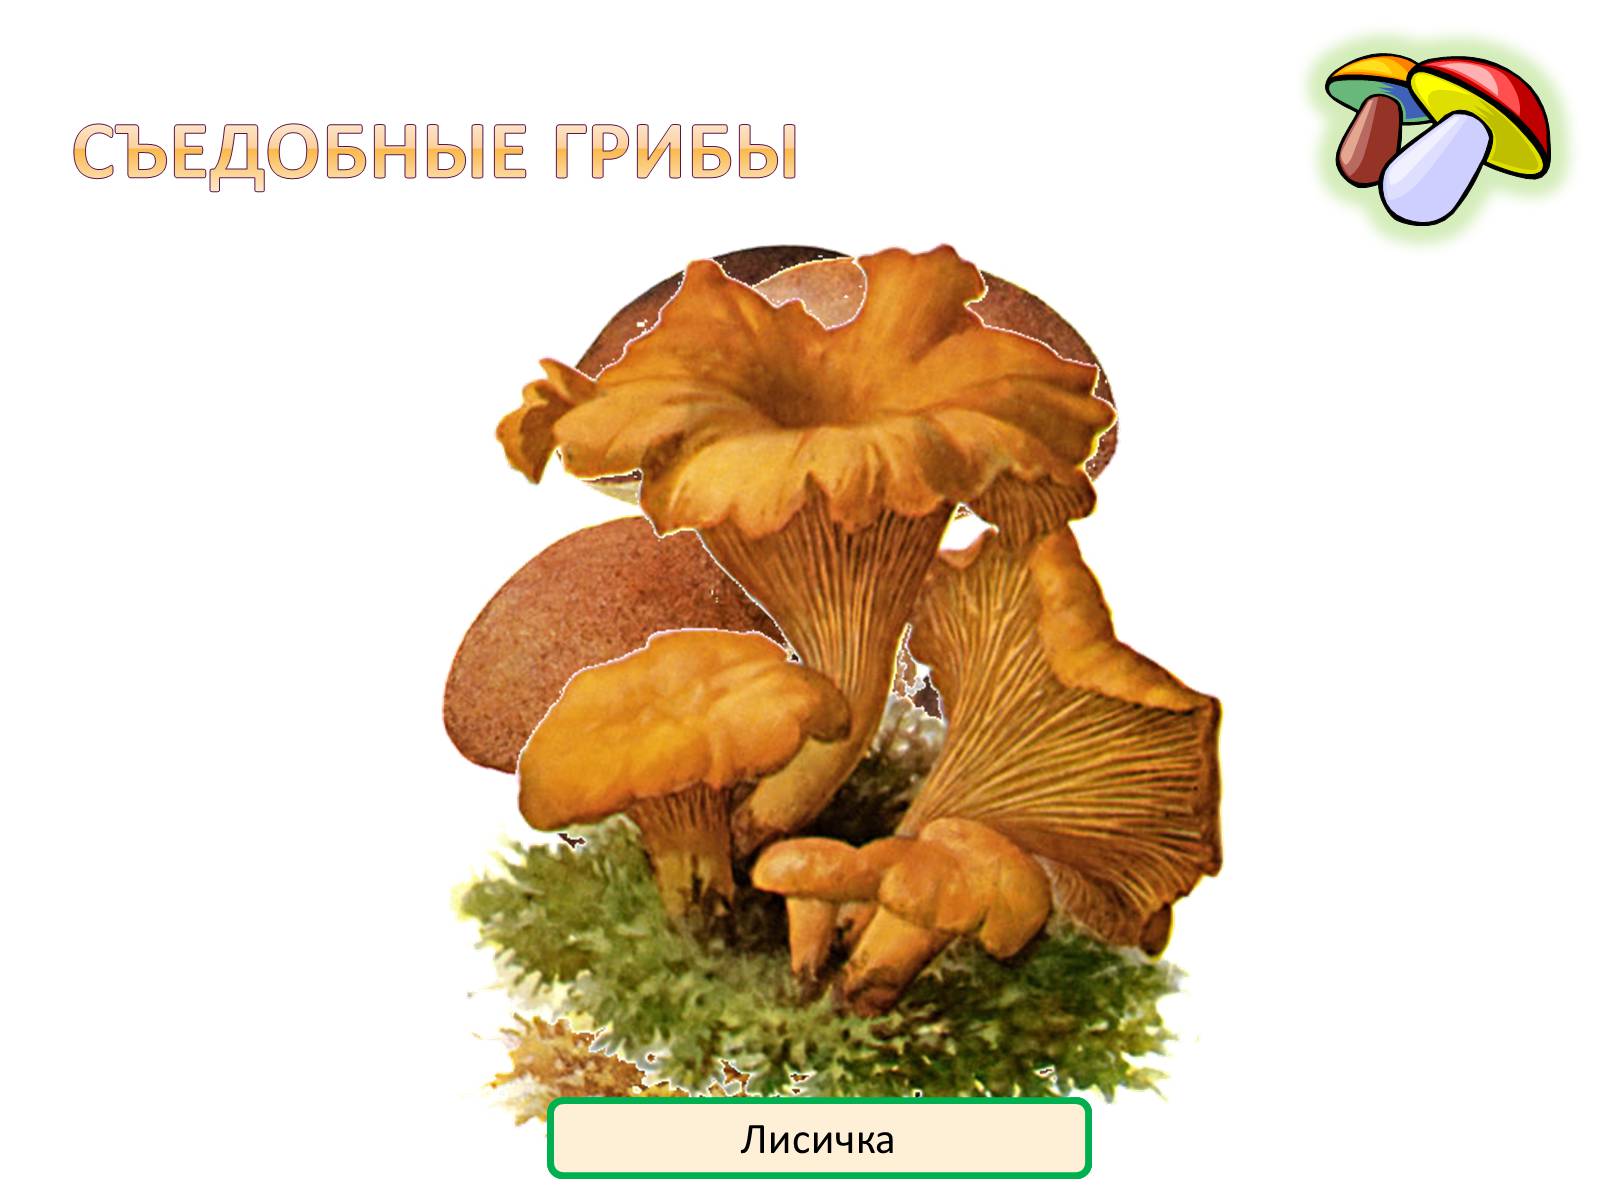 Презентація на тему «Шляпочные грибы» - Слайд #10